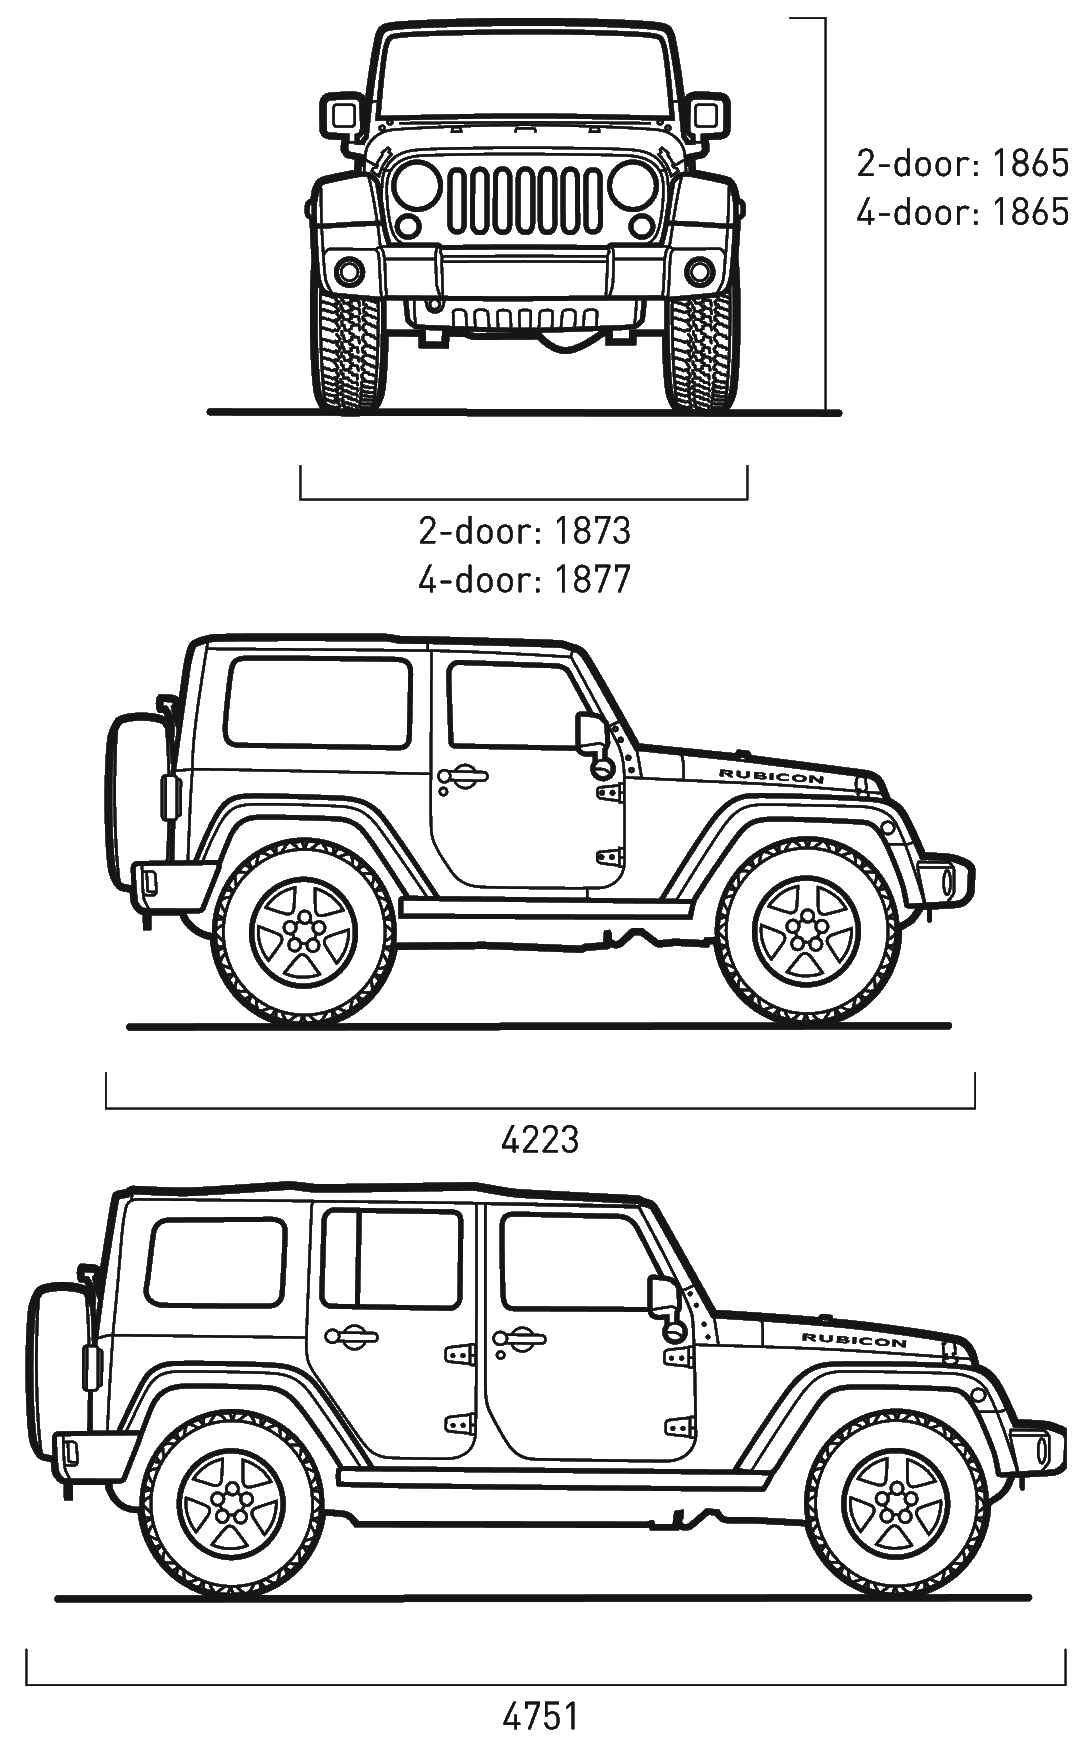 2008 Jeep wrangler dimensions